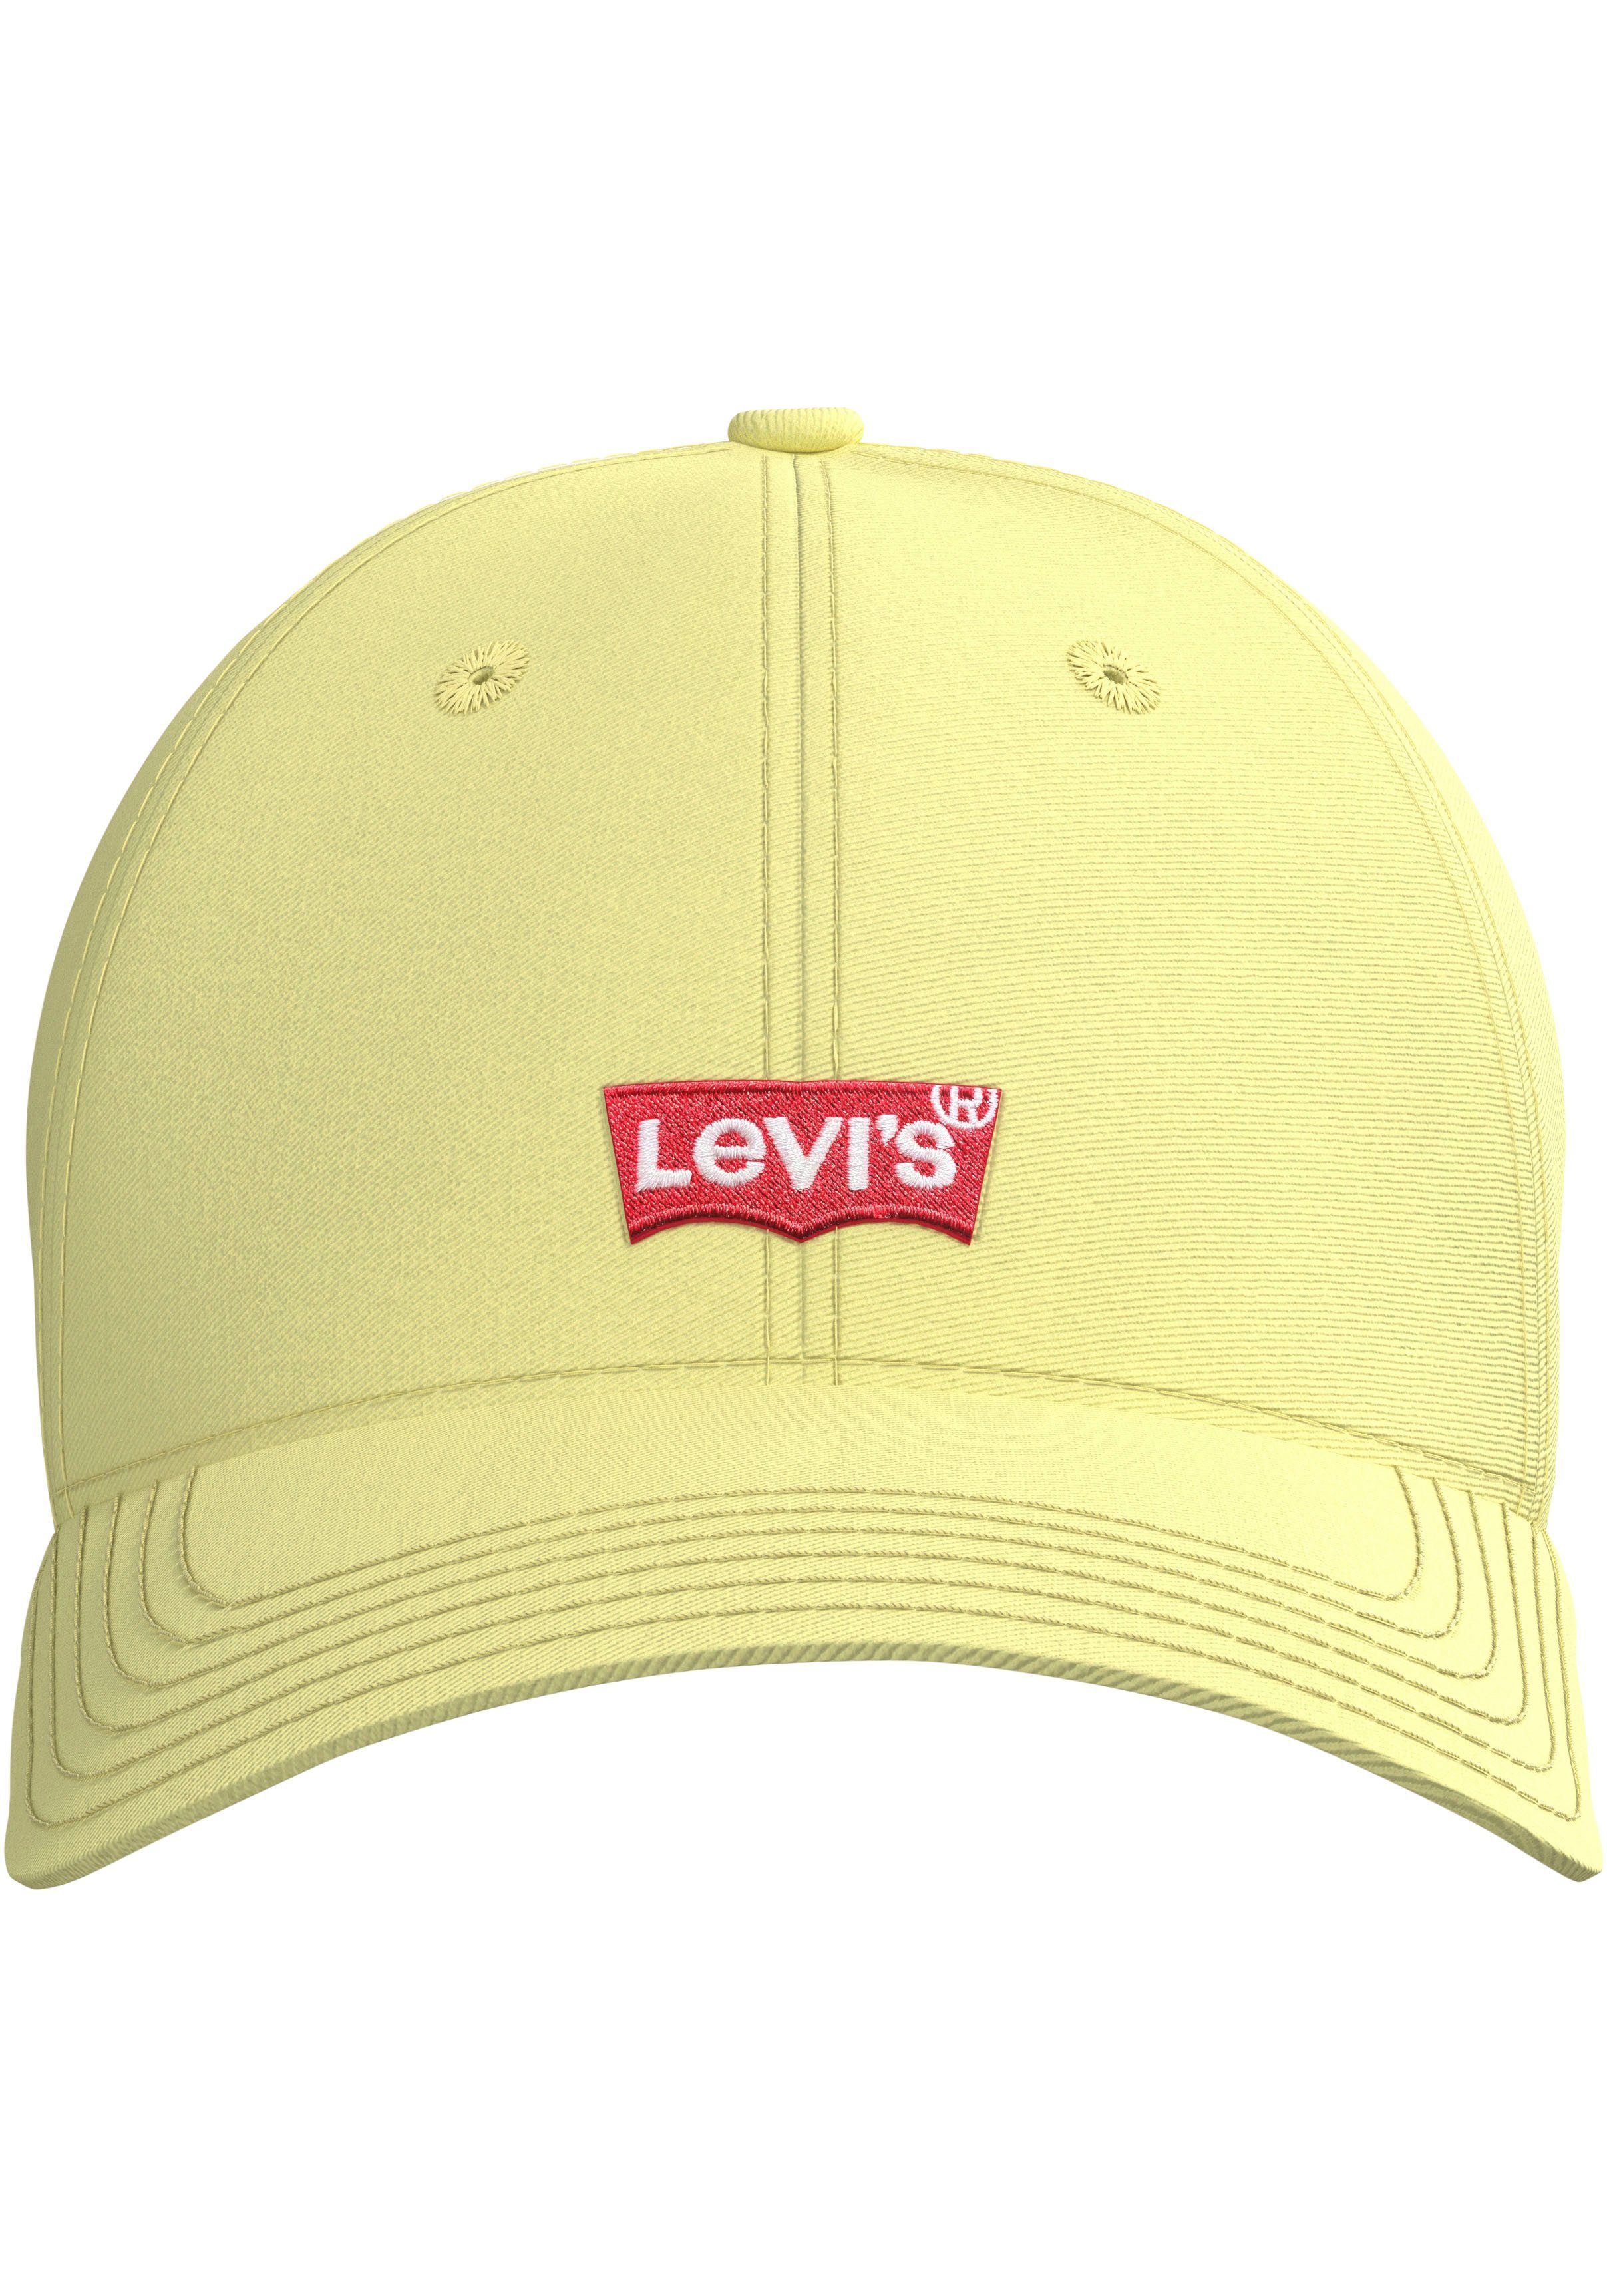 Levi's® Baseball Cap Housemark yellow Flexfit pastell